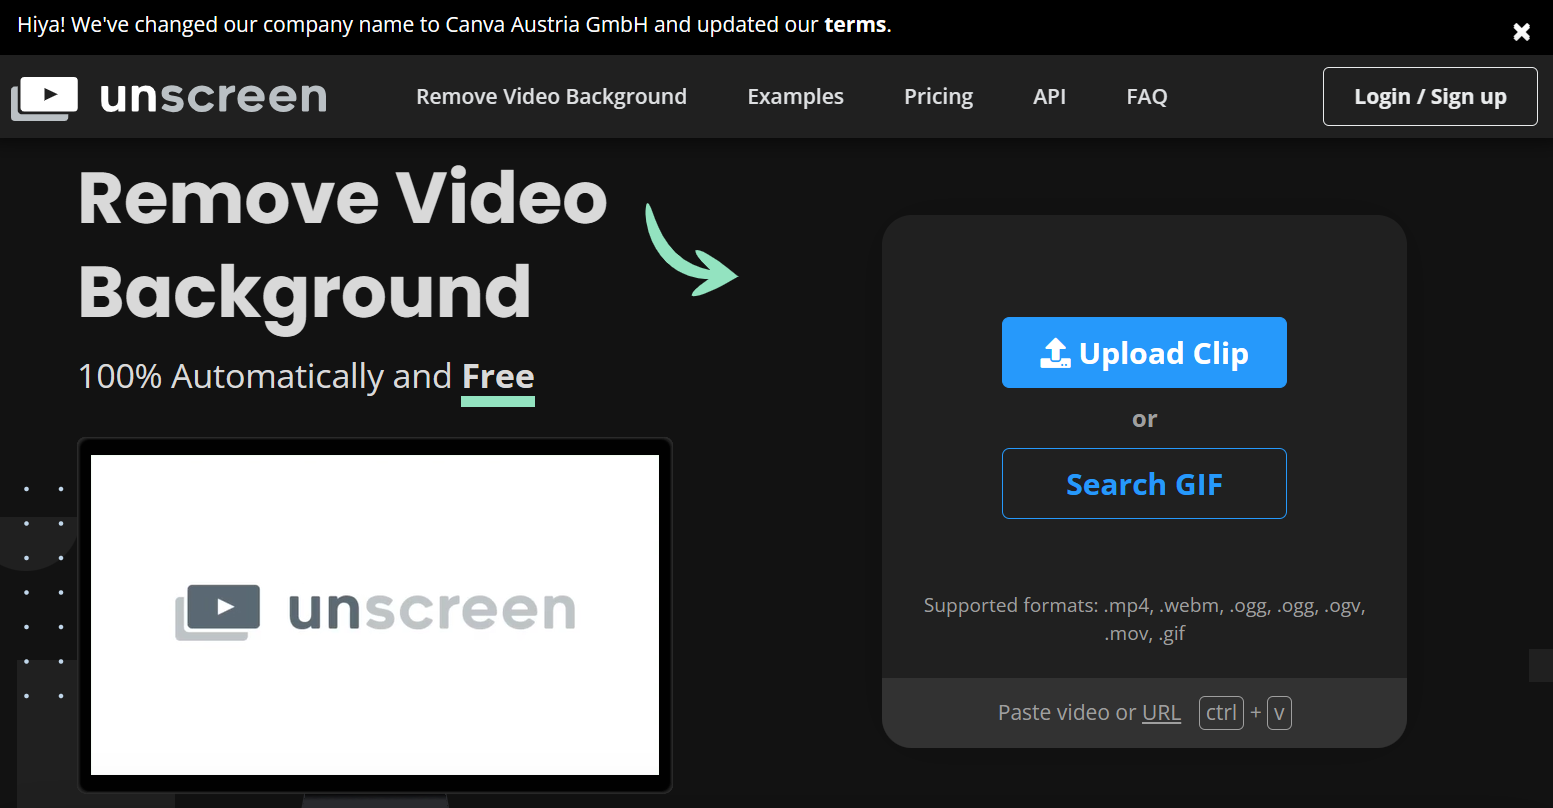 unscreen.com – remove video background